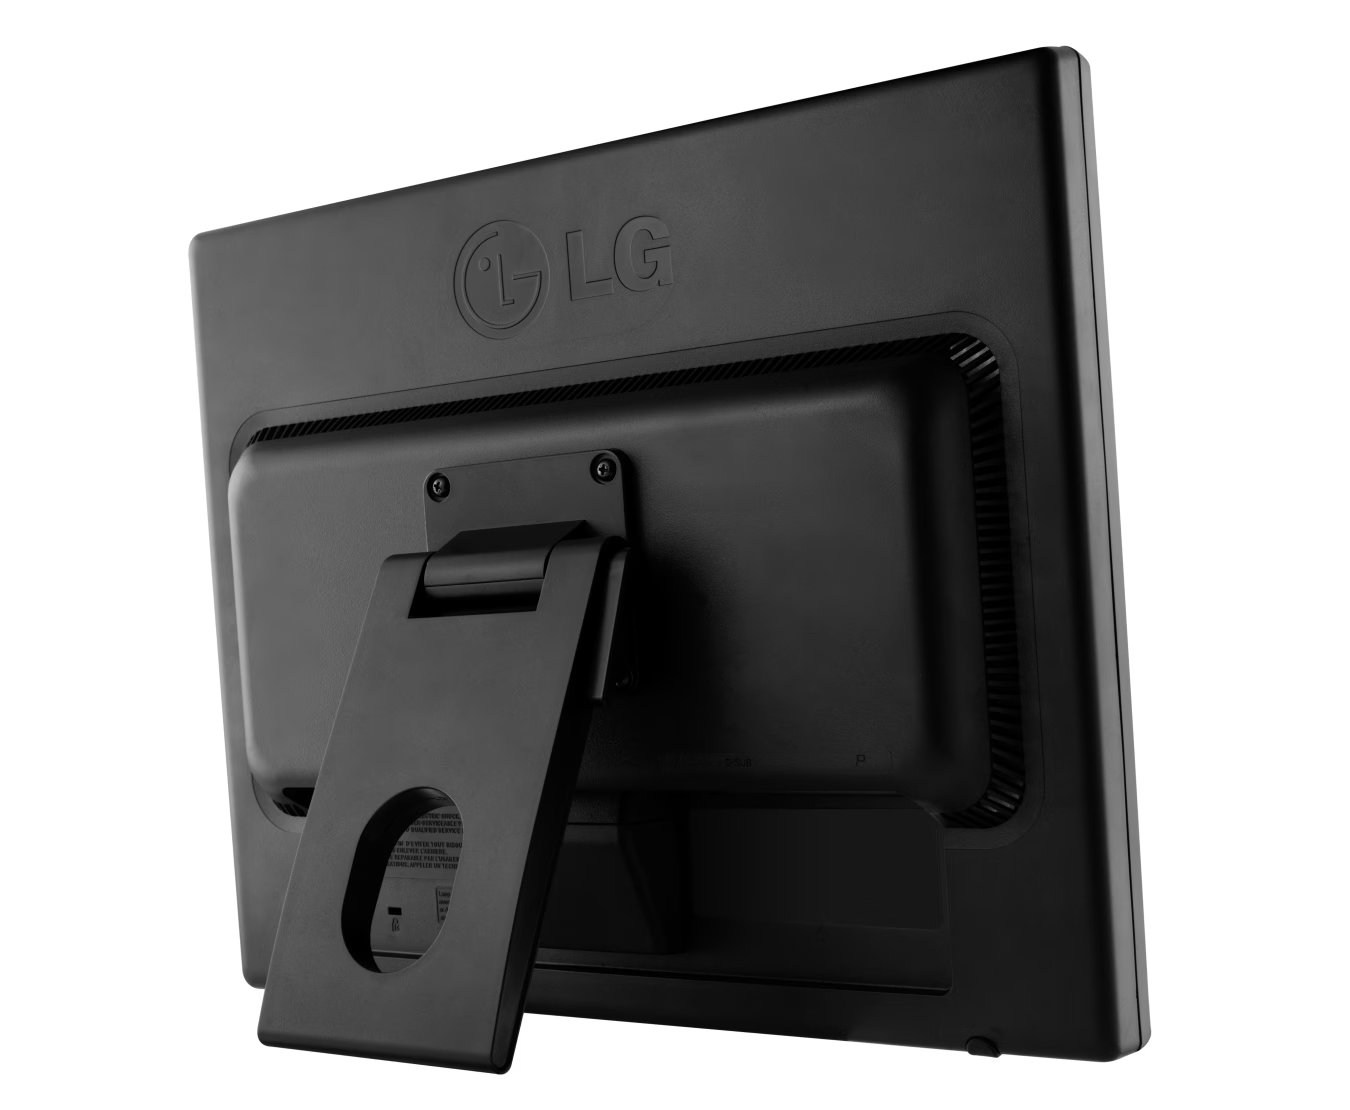 Monitor LG 17MB15TP Touchscreen